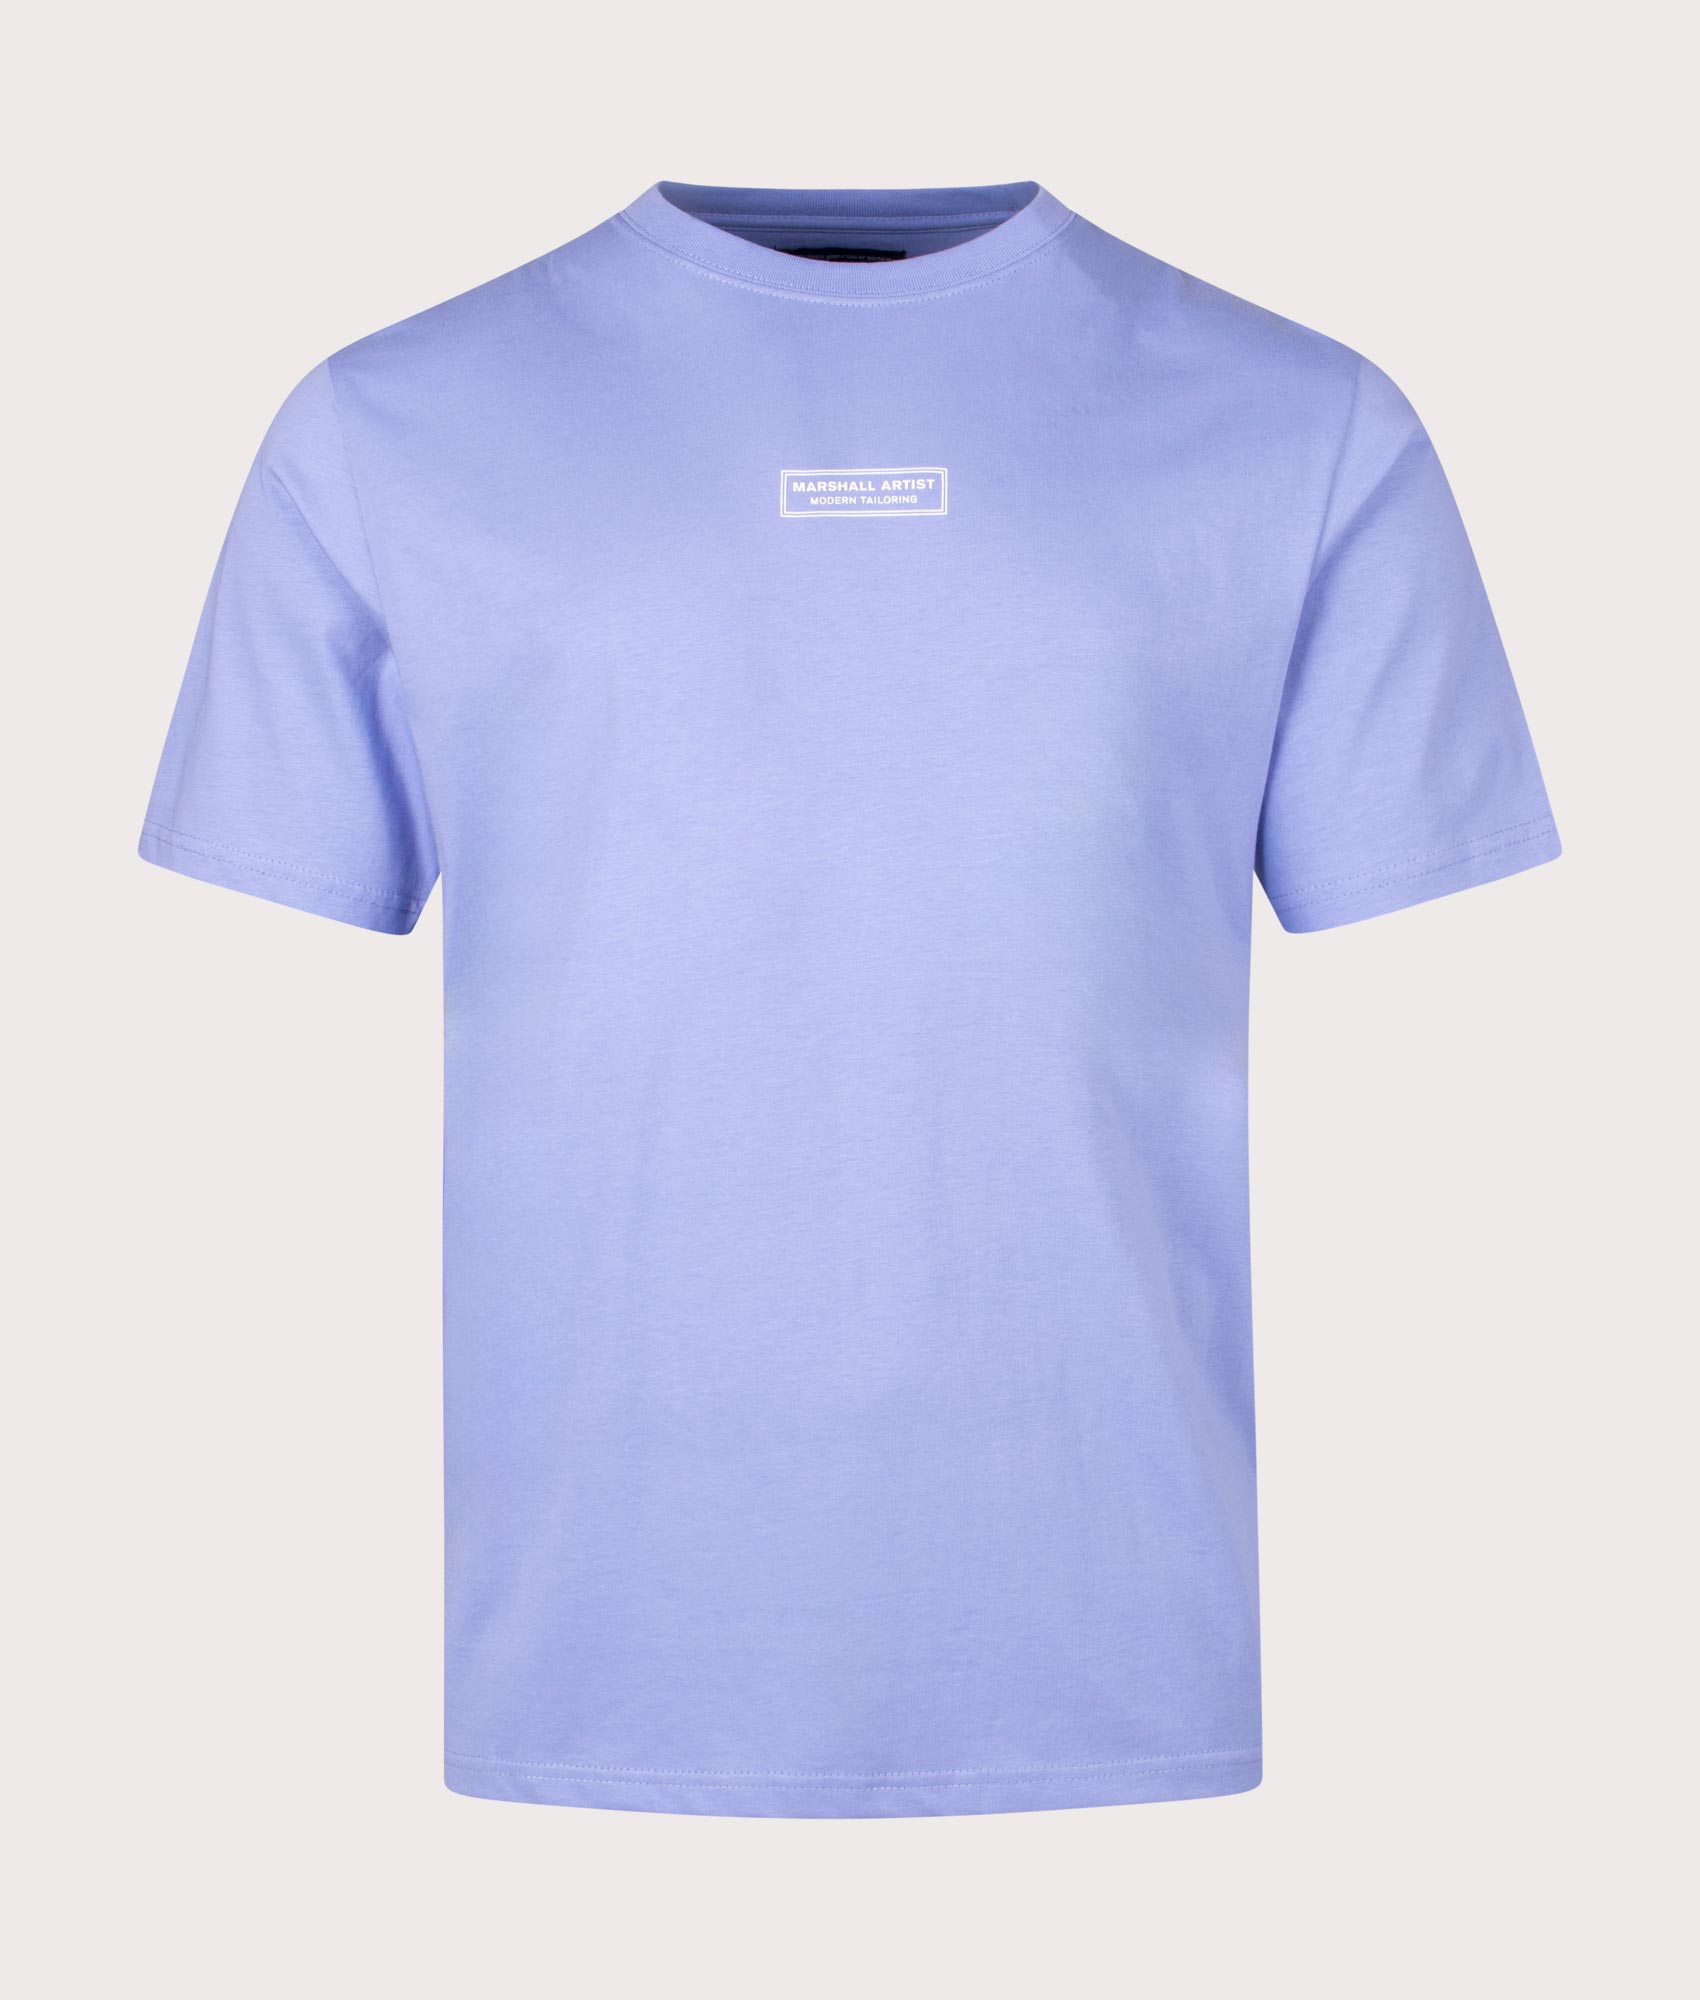 Marshall Artist Mens Injection T-Shirt - Colour: 079 Ultra Violet - Size: Medium